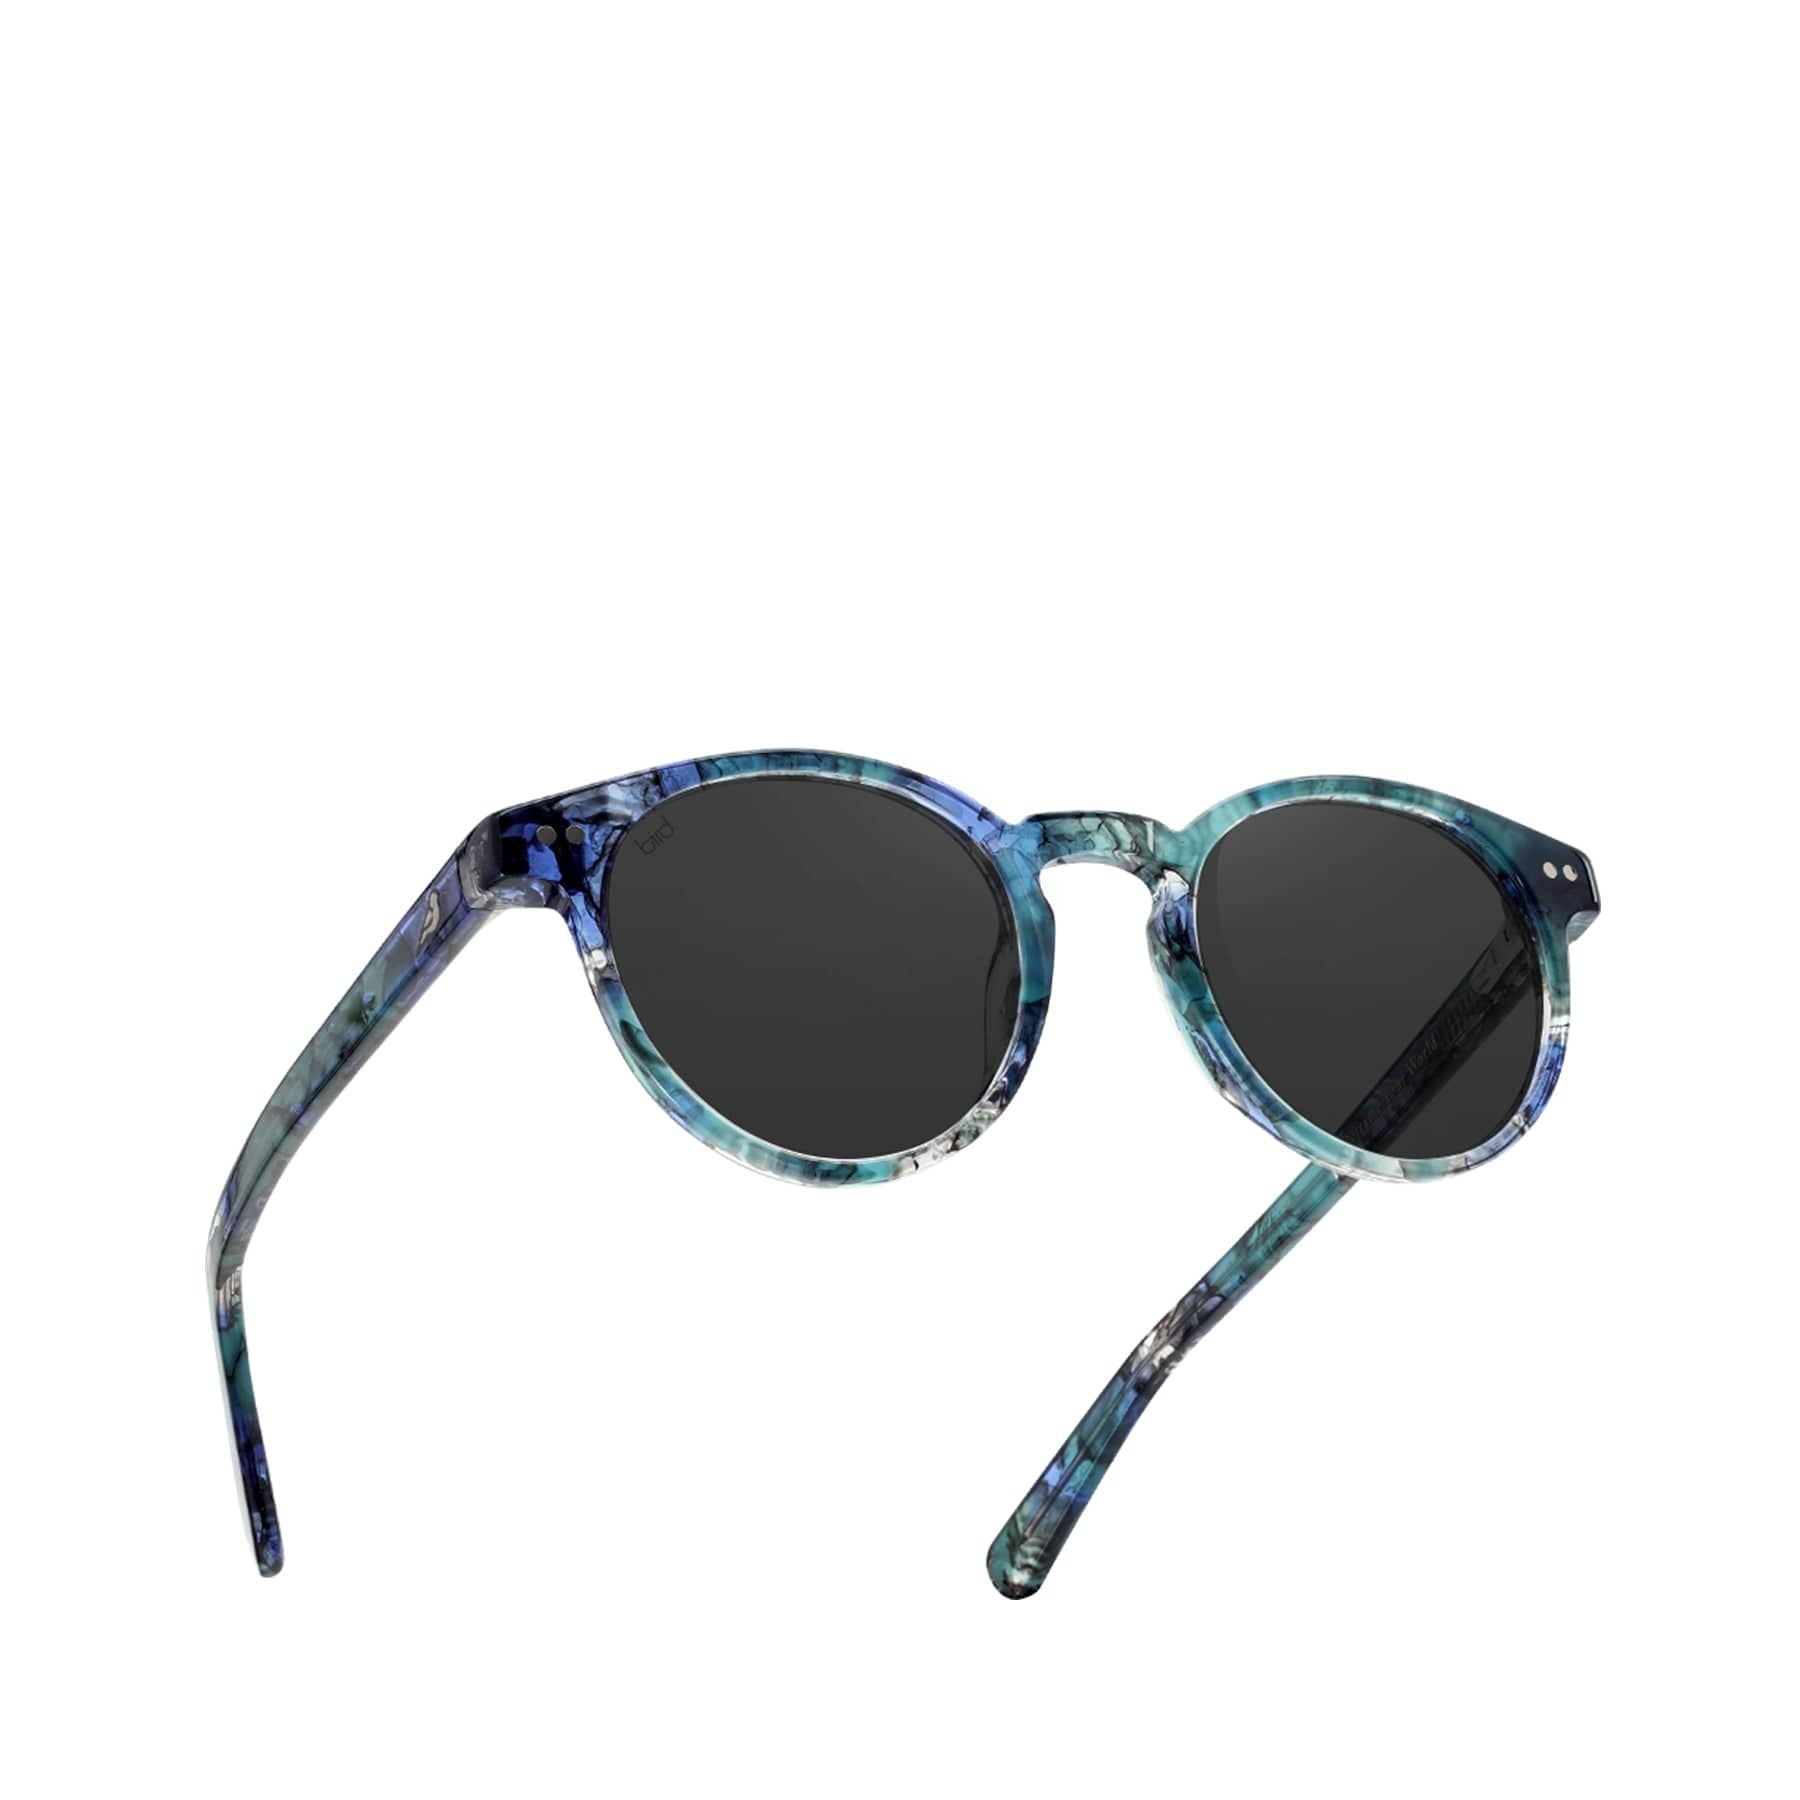 Tawny sunglasses reef